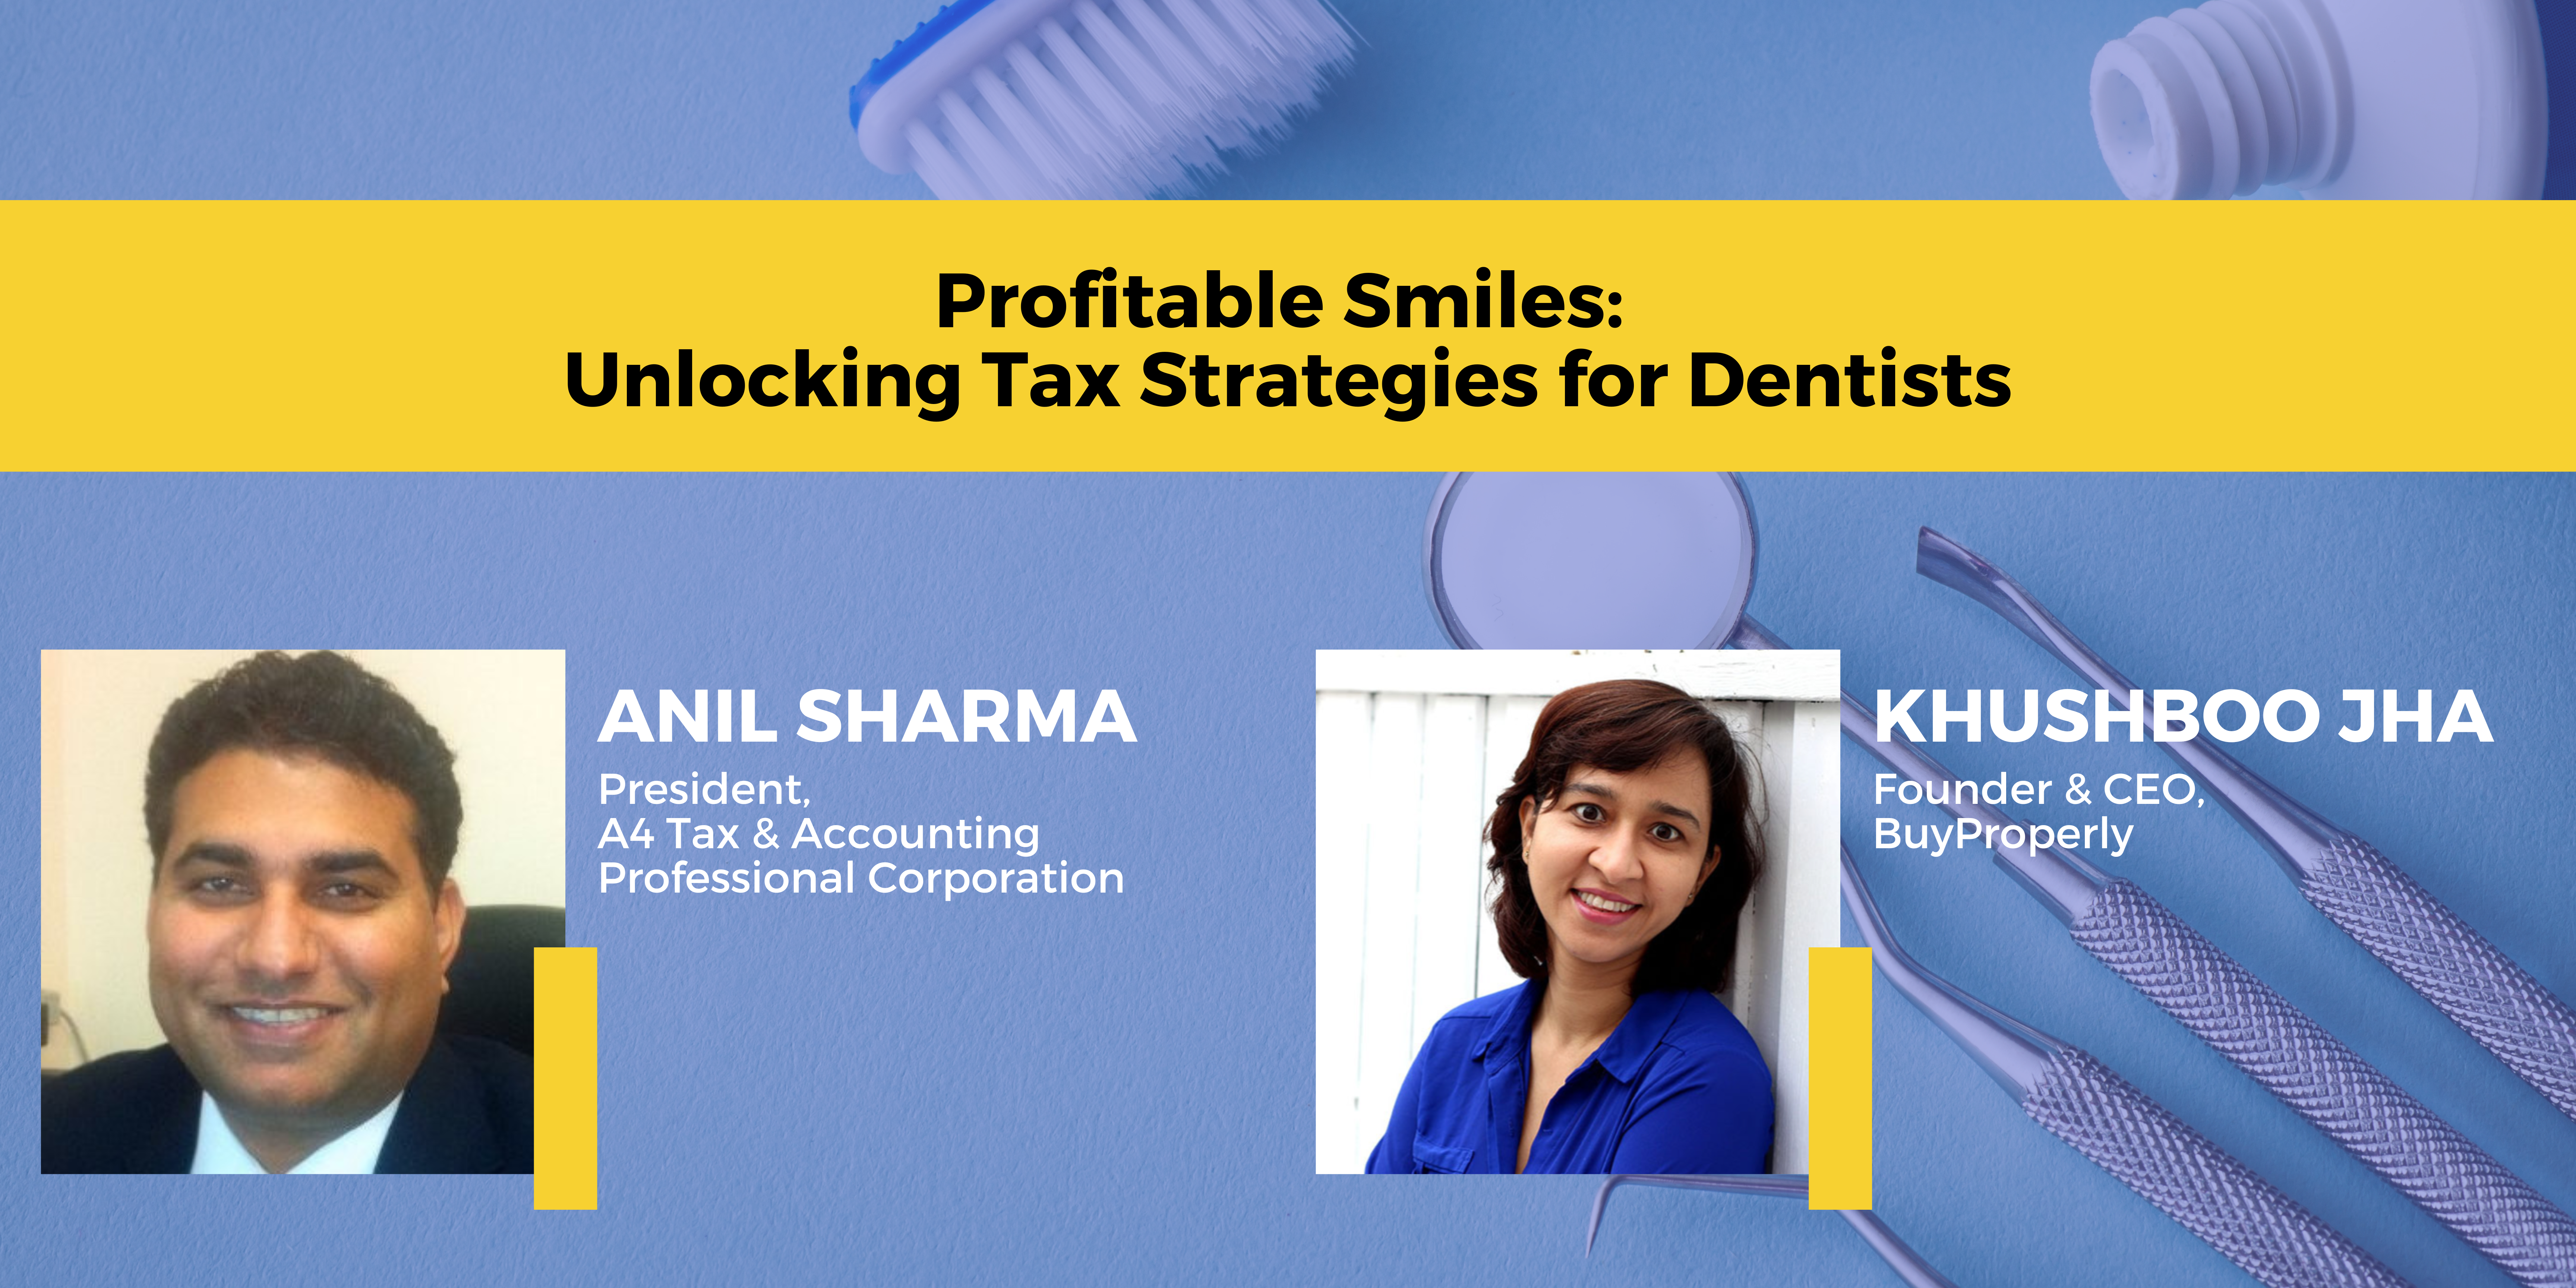 Unlocking Profitable Tax Strategies for Dentists: A Webinar Discussion